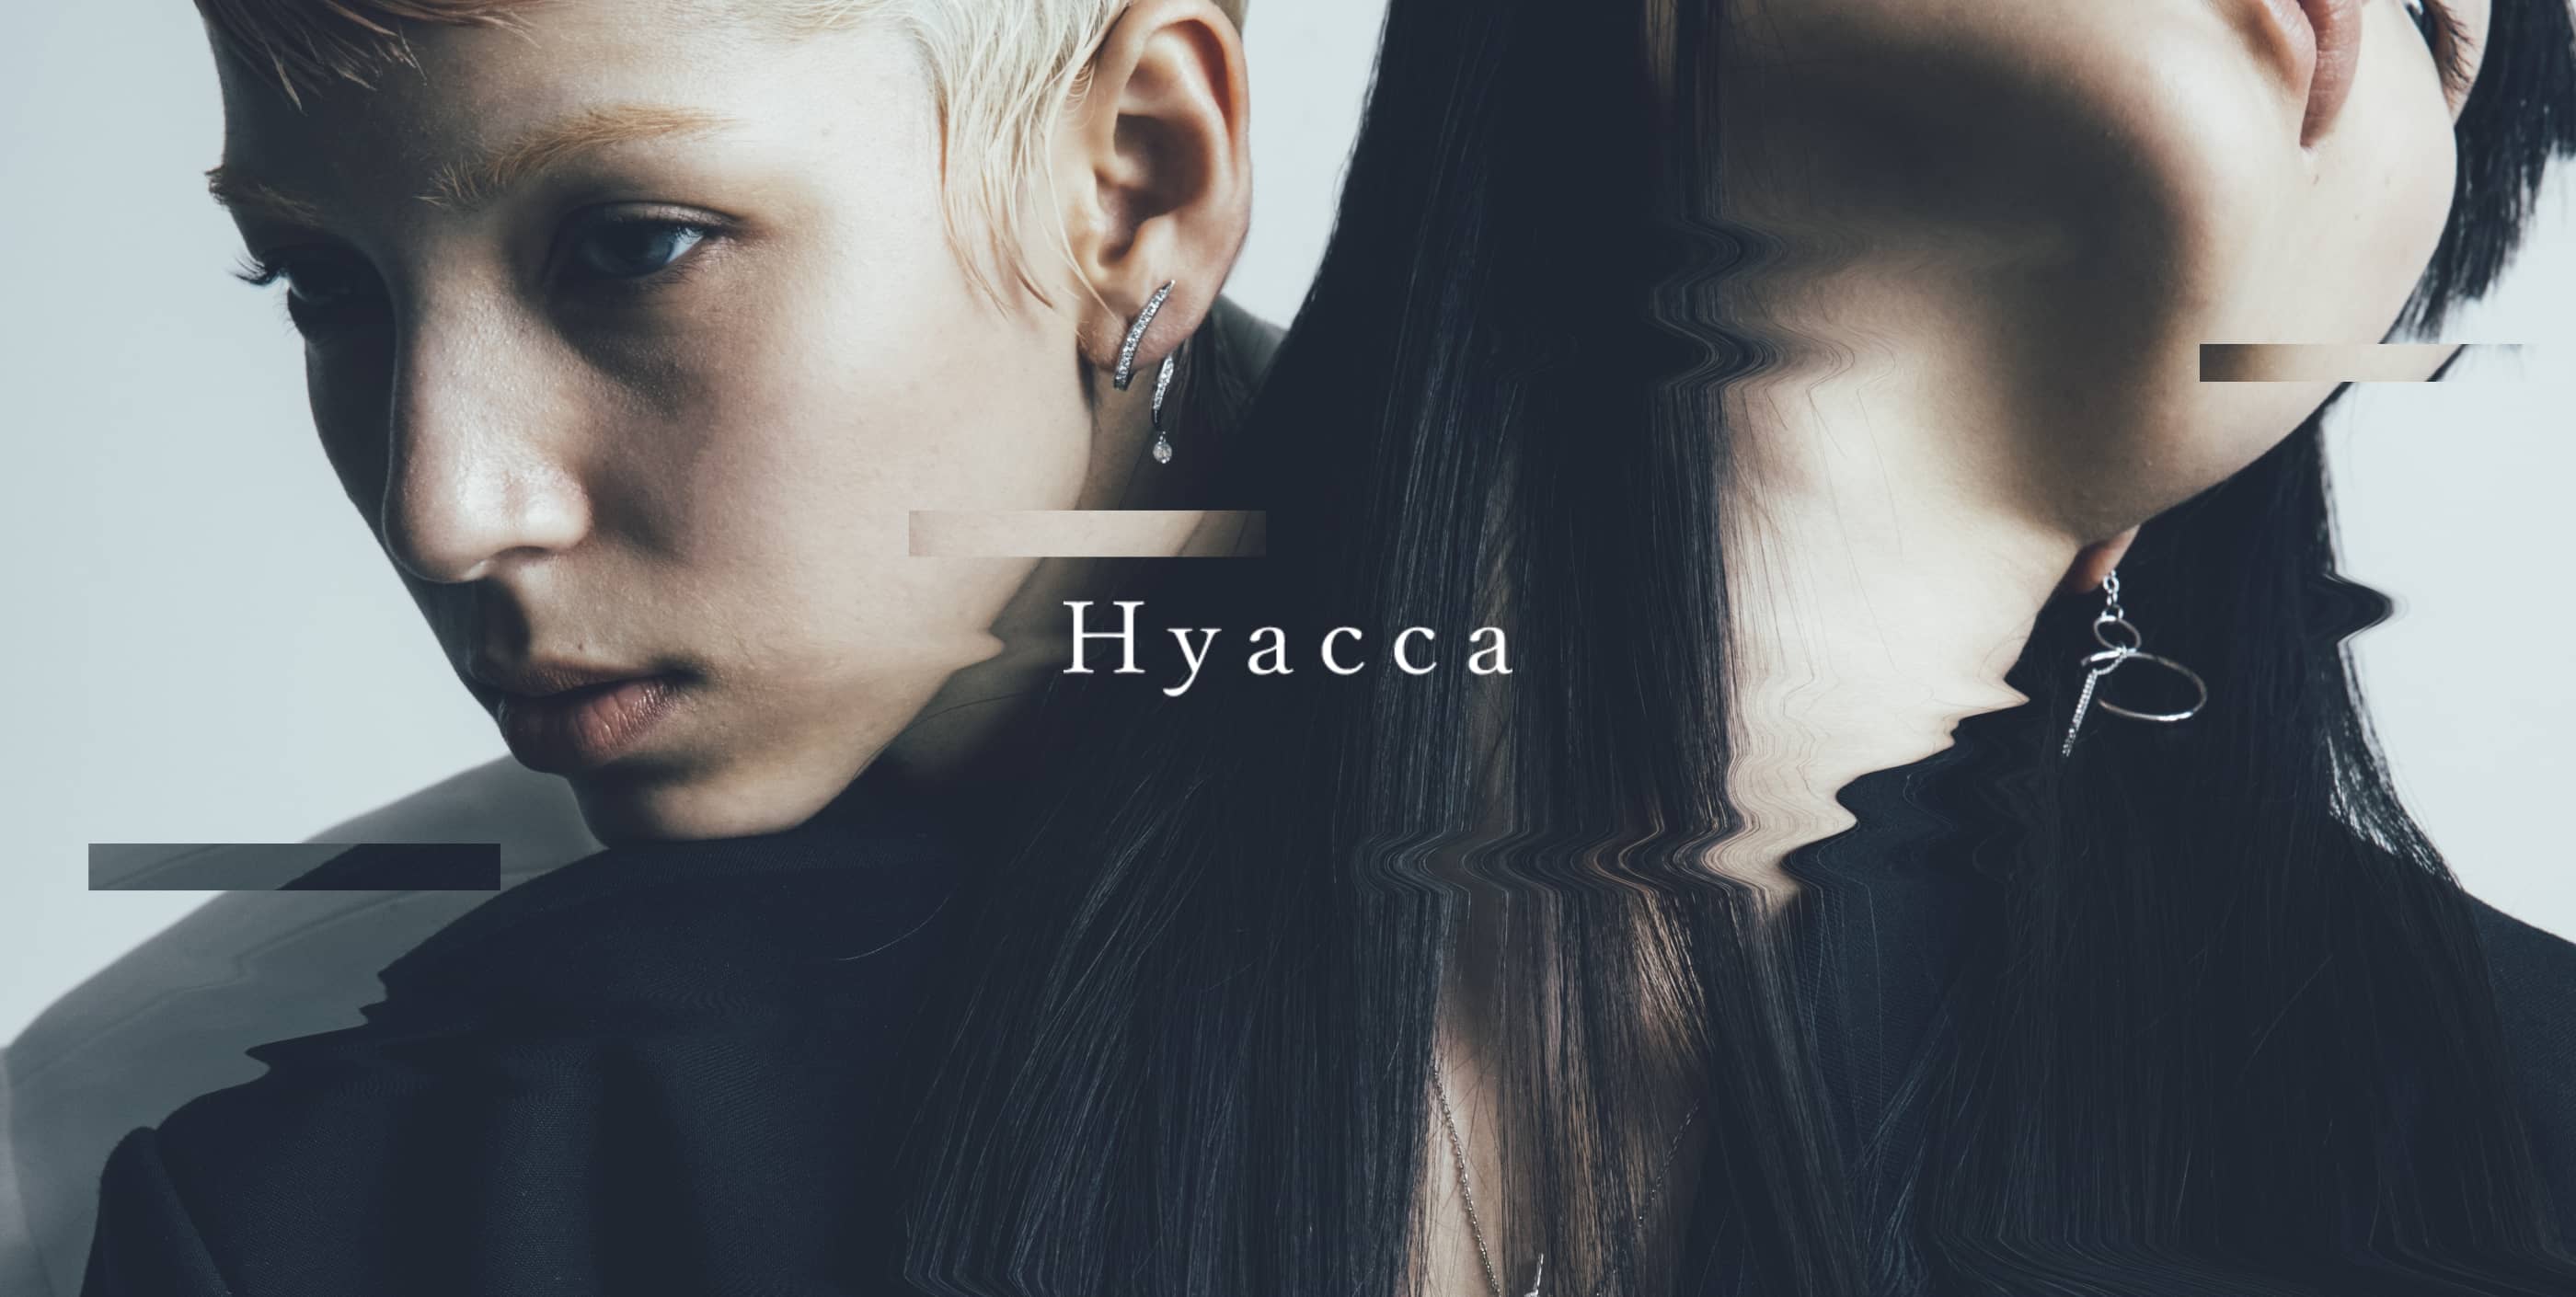 Hyacca